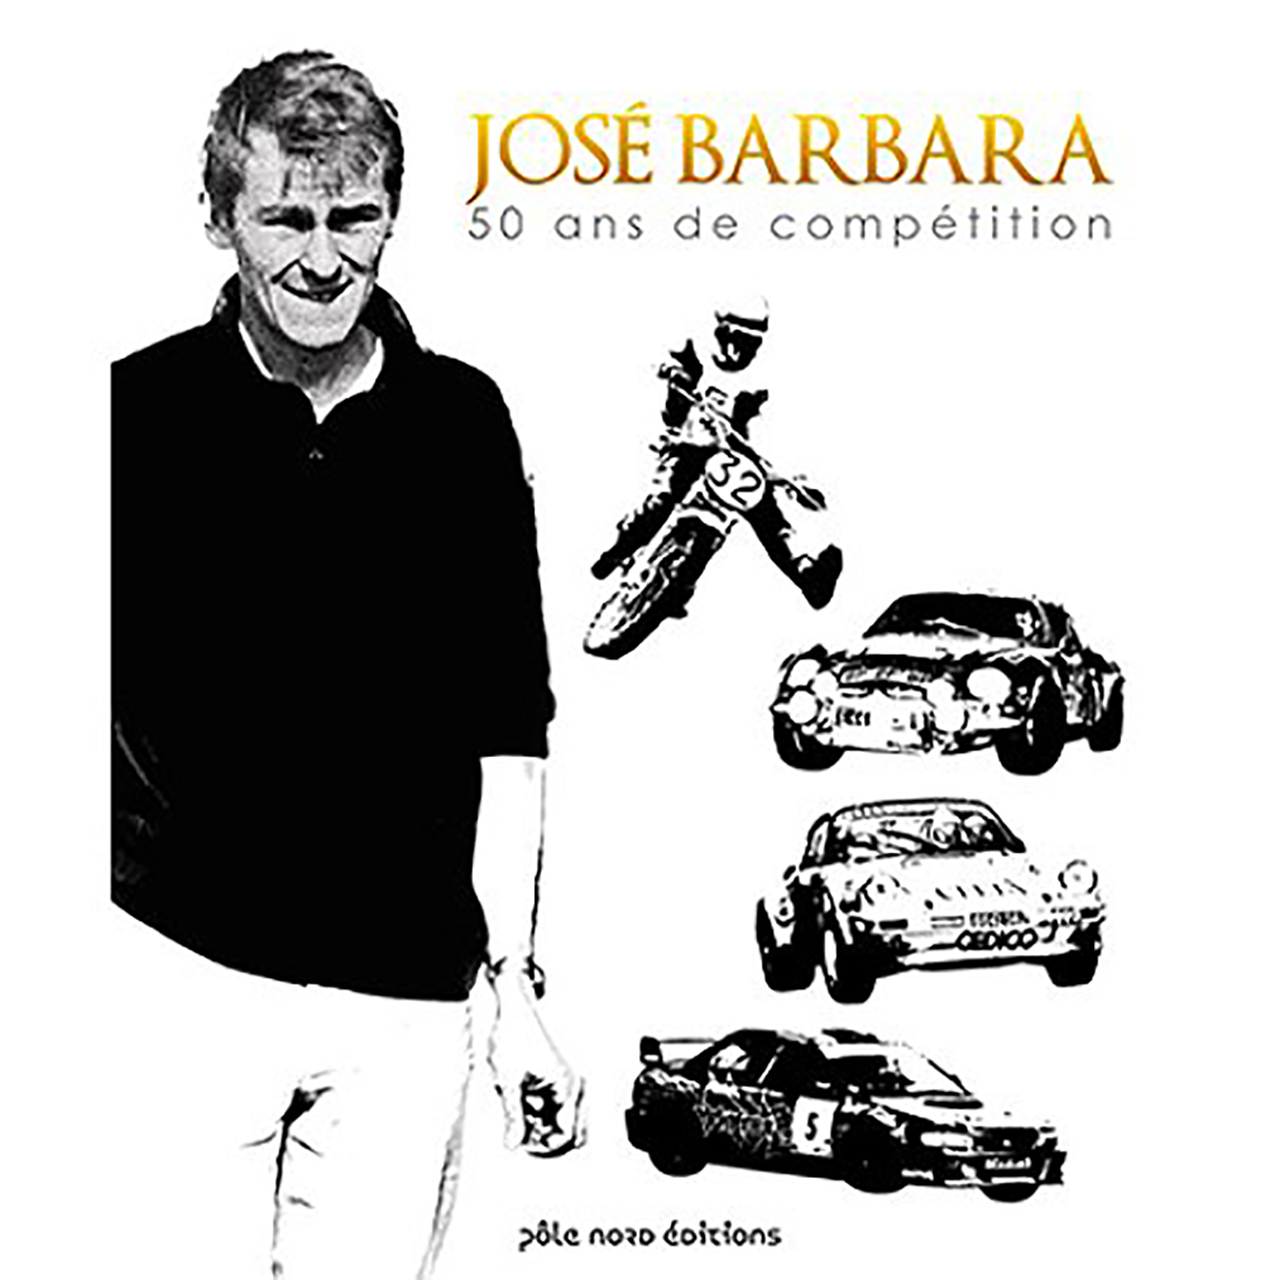 Jose barbara 50 ans de competition